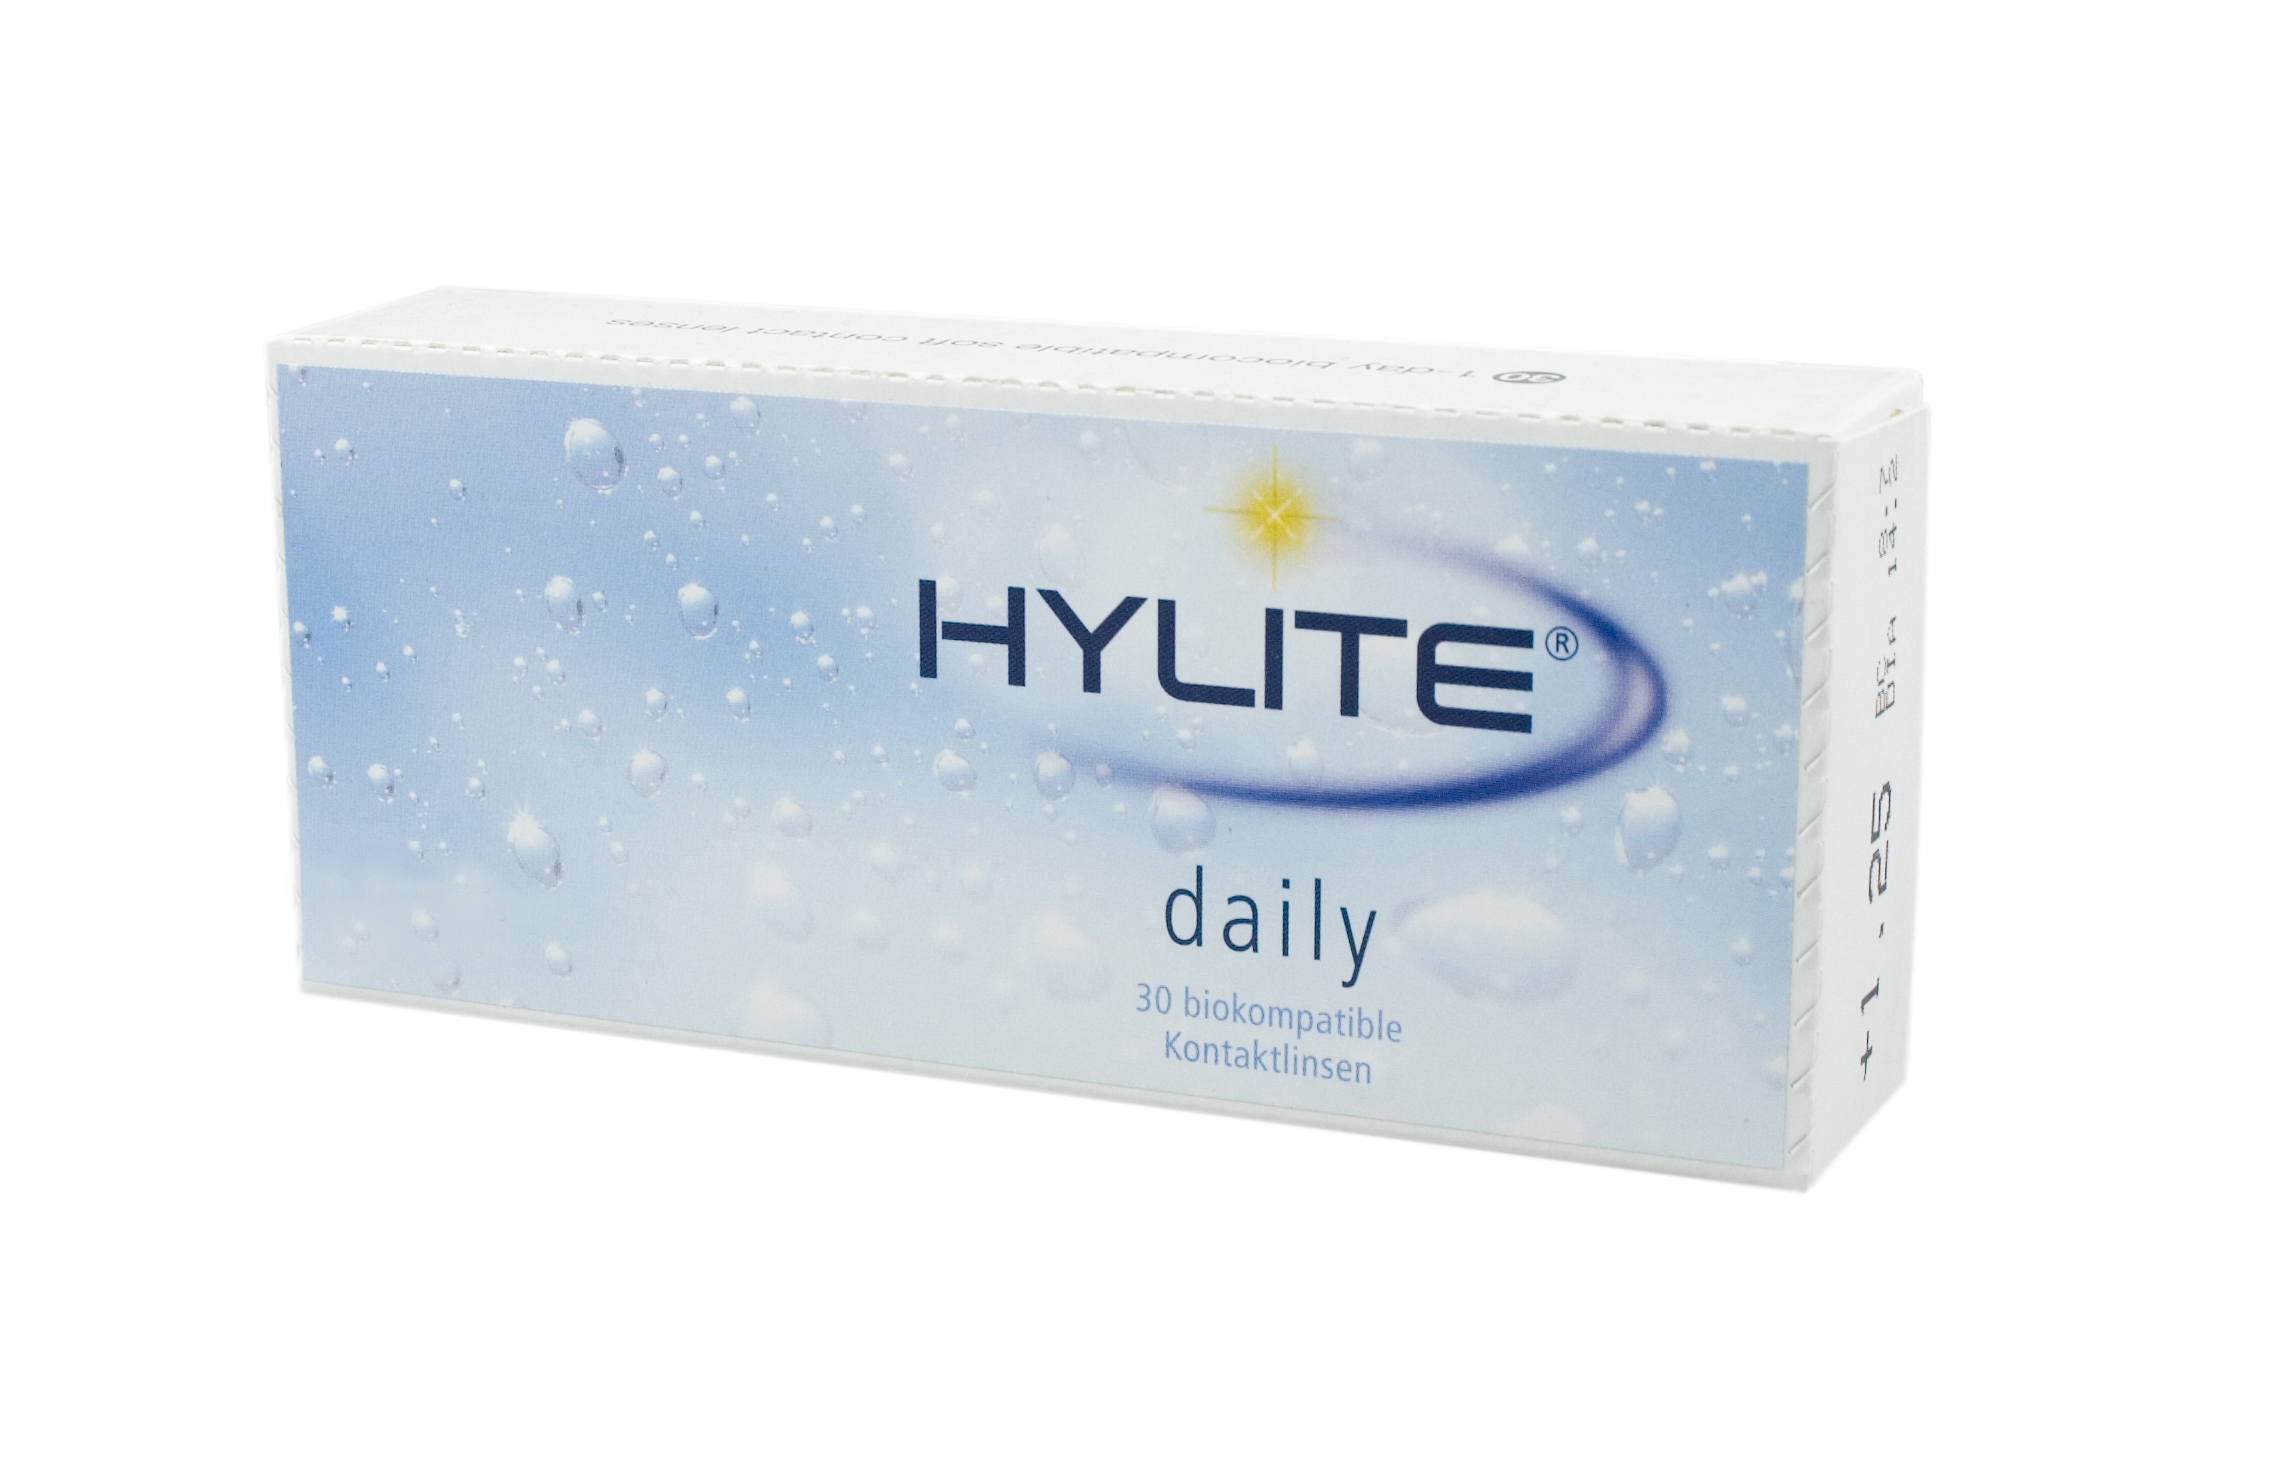 HYLITE daily 30er Box BK 8,7 dpt-2,25